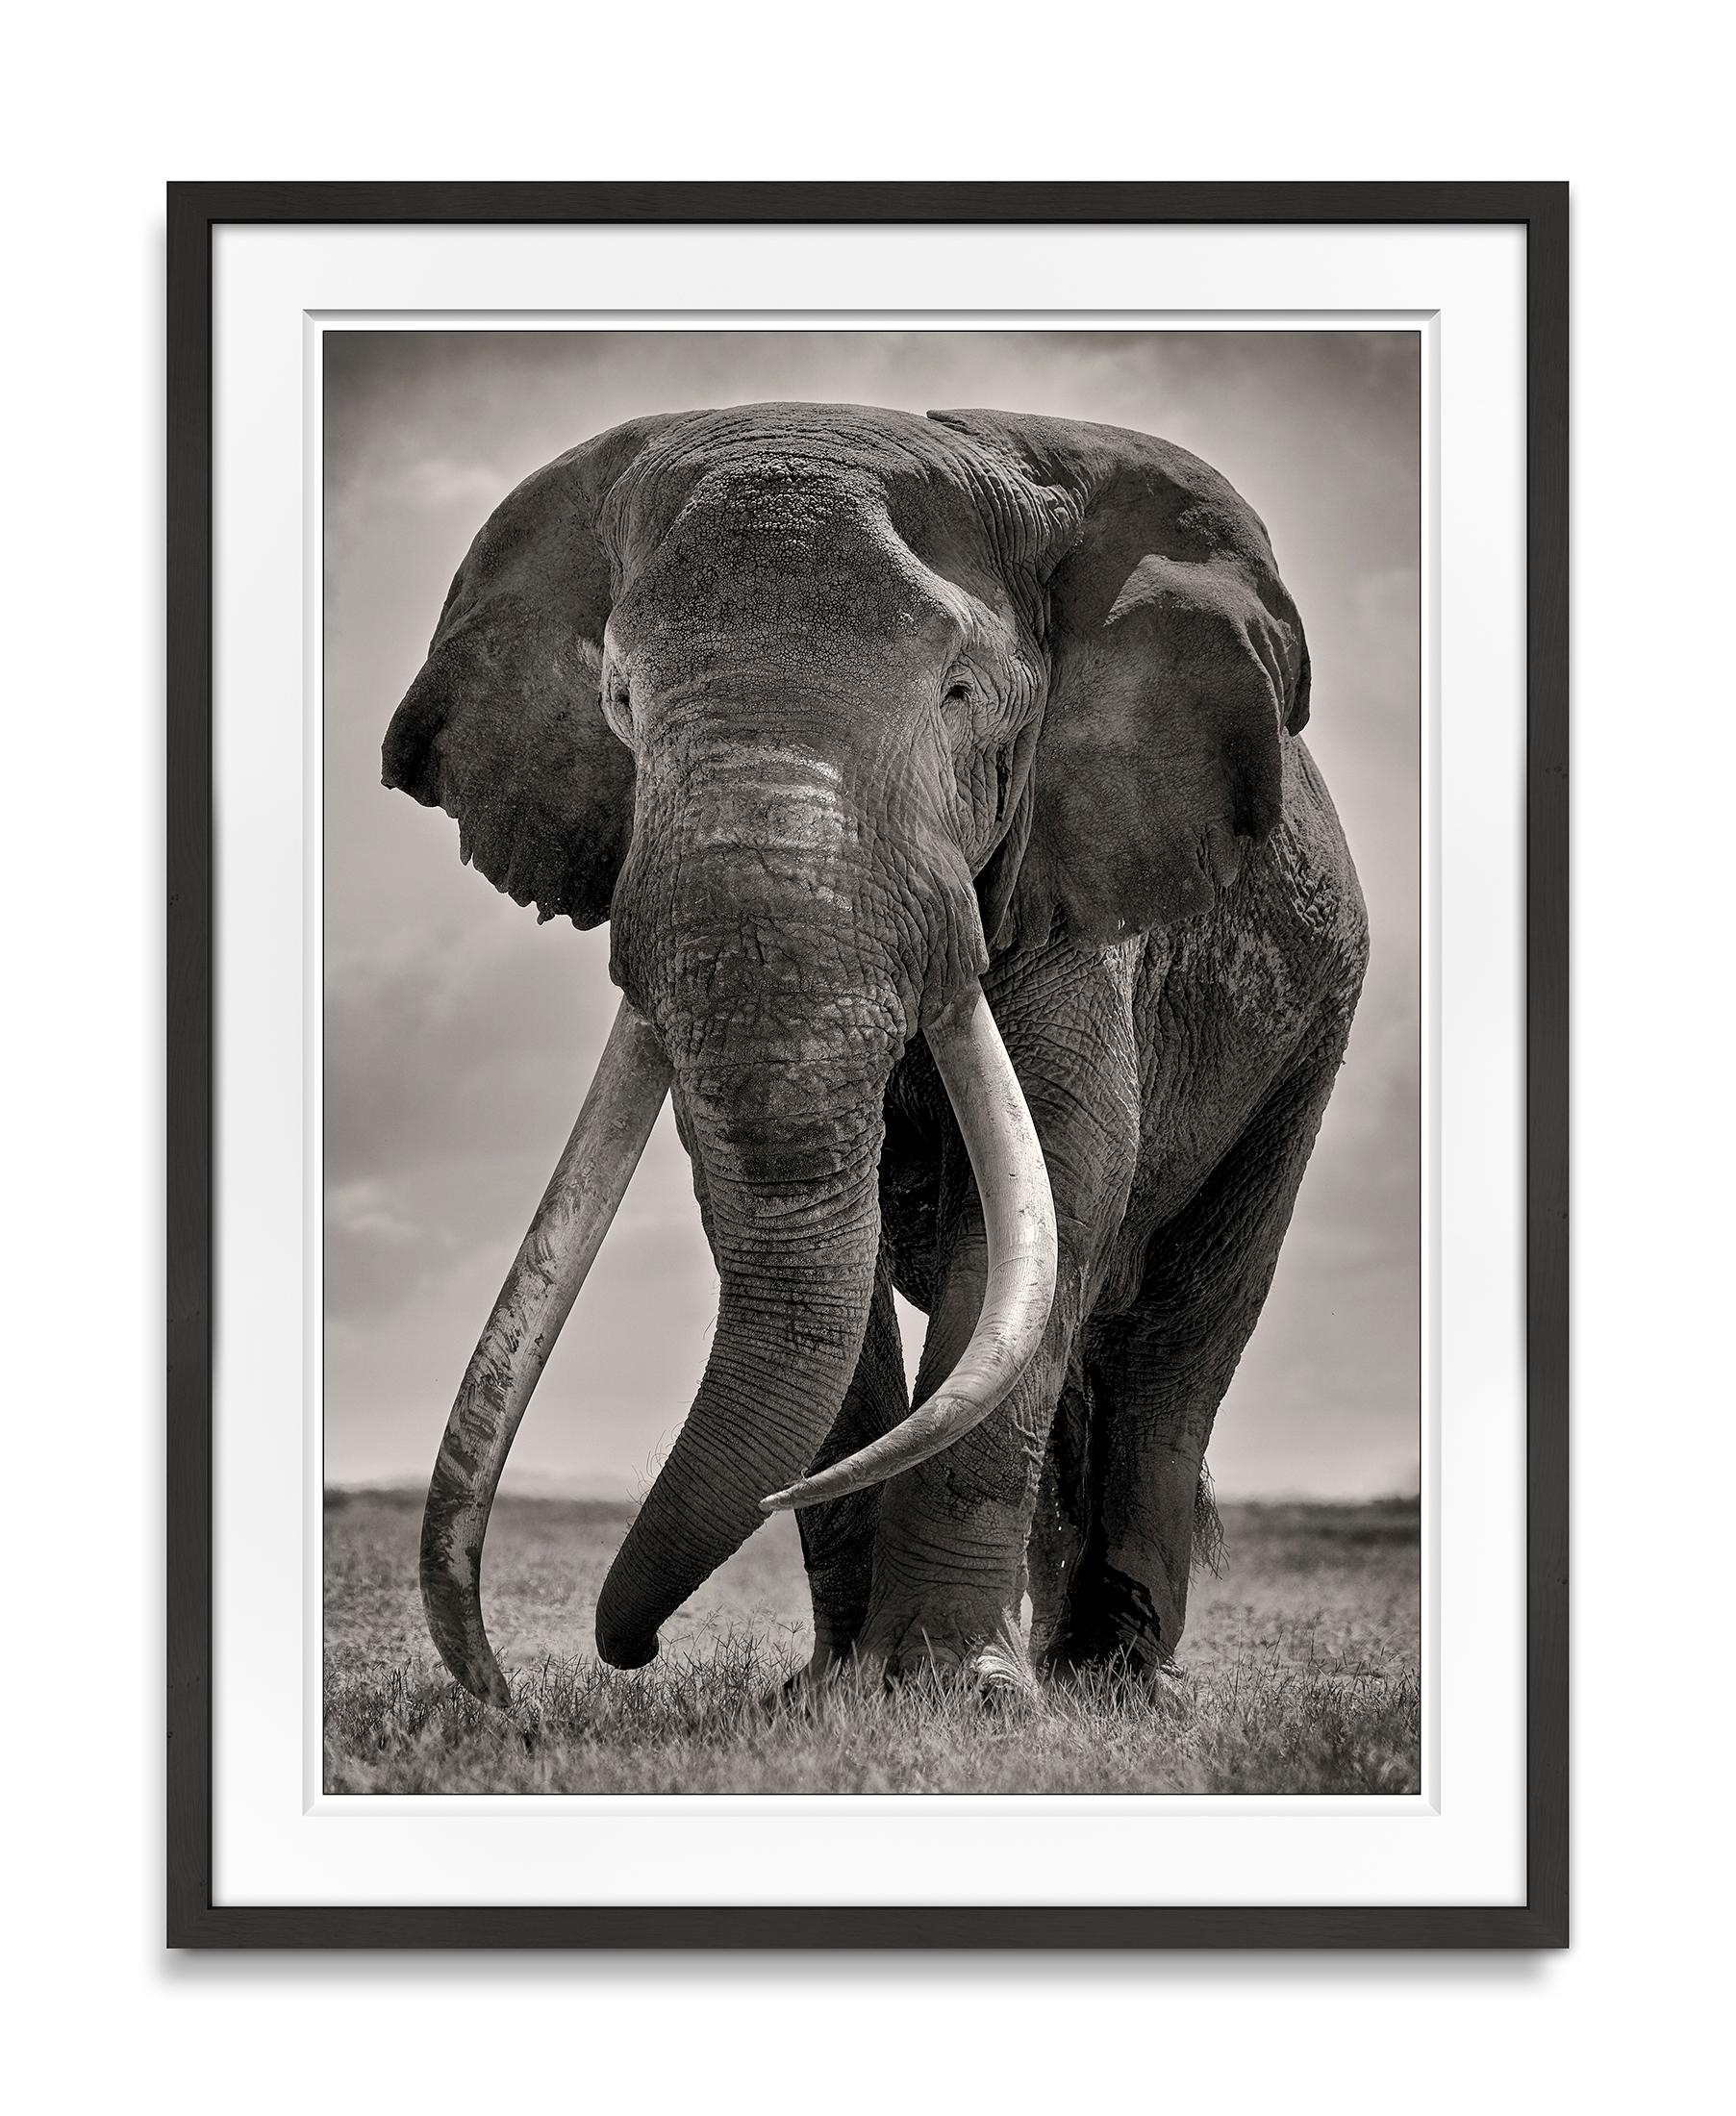 Preserver of peace II, Kenya, Elephant, b&w photography - Photograph by Joachim Schmeisser